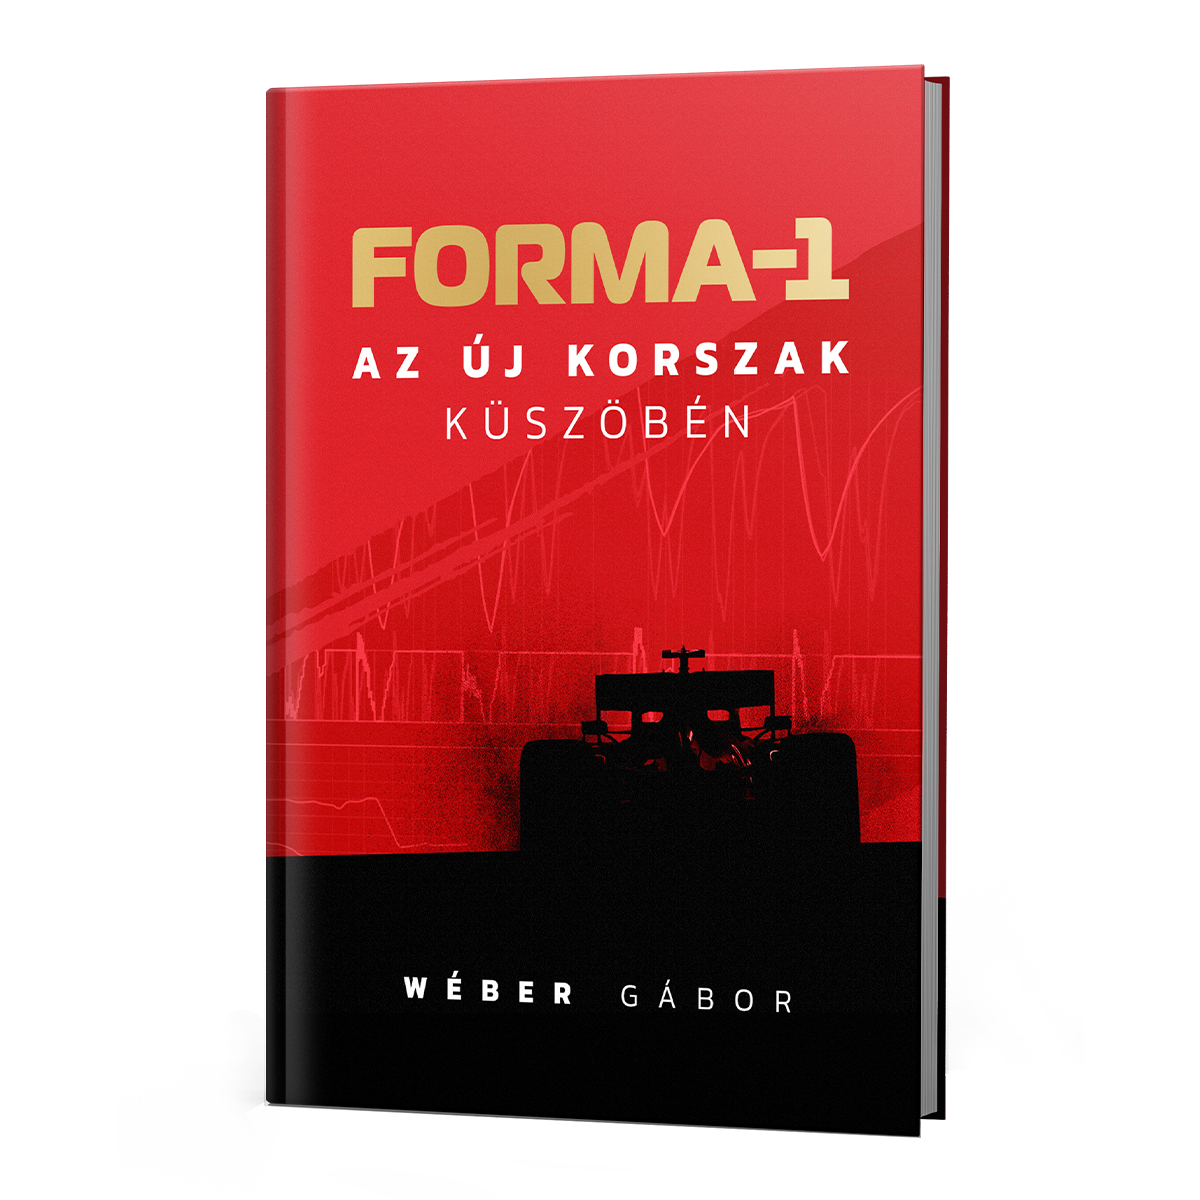 wg_forma1_reloaded_book_mockup_1.png